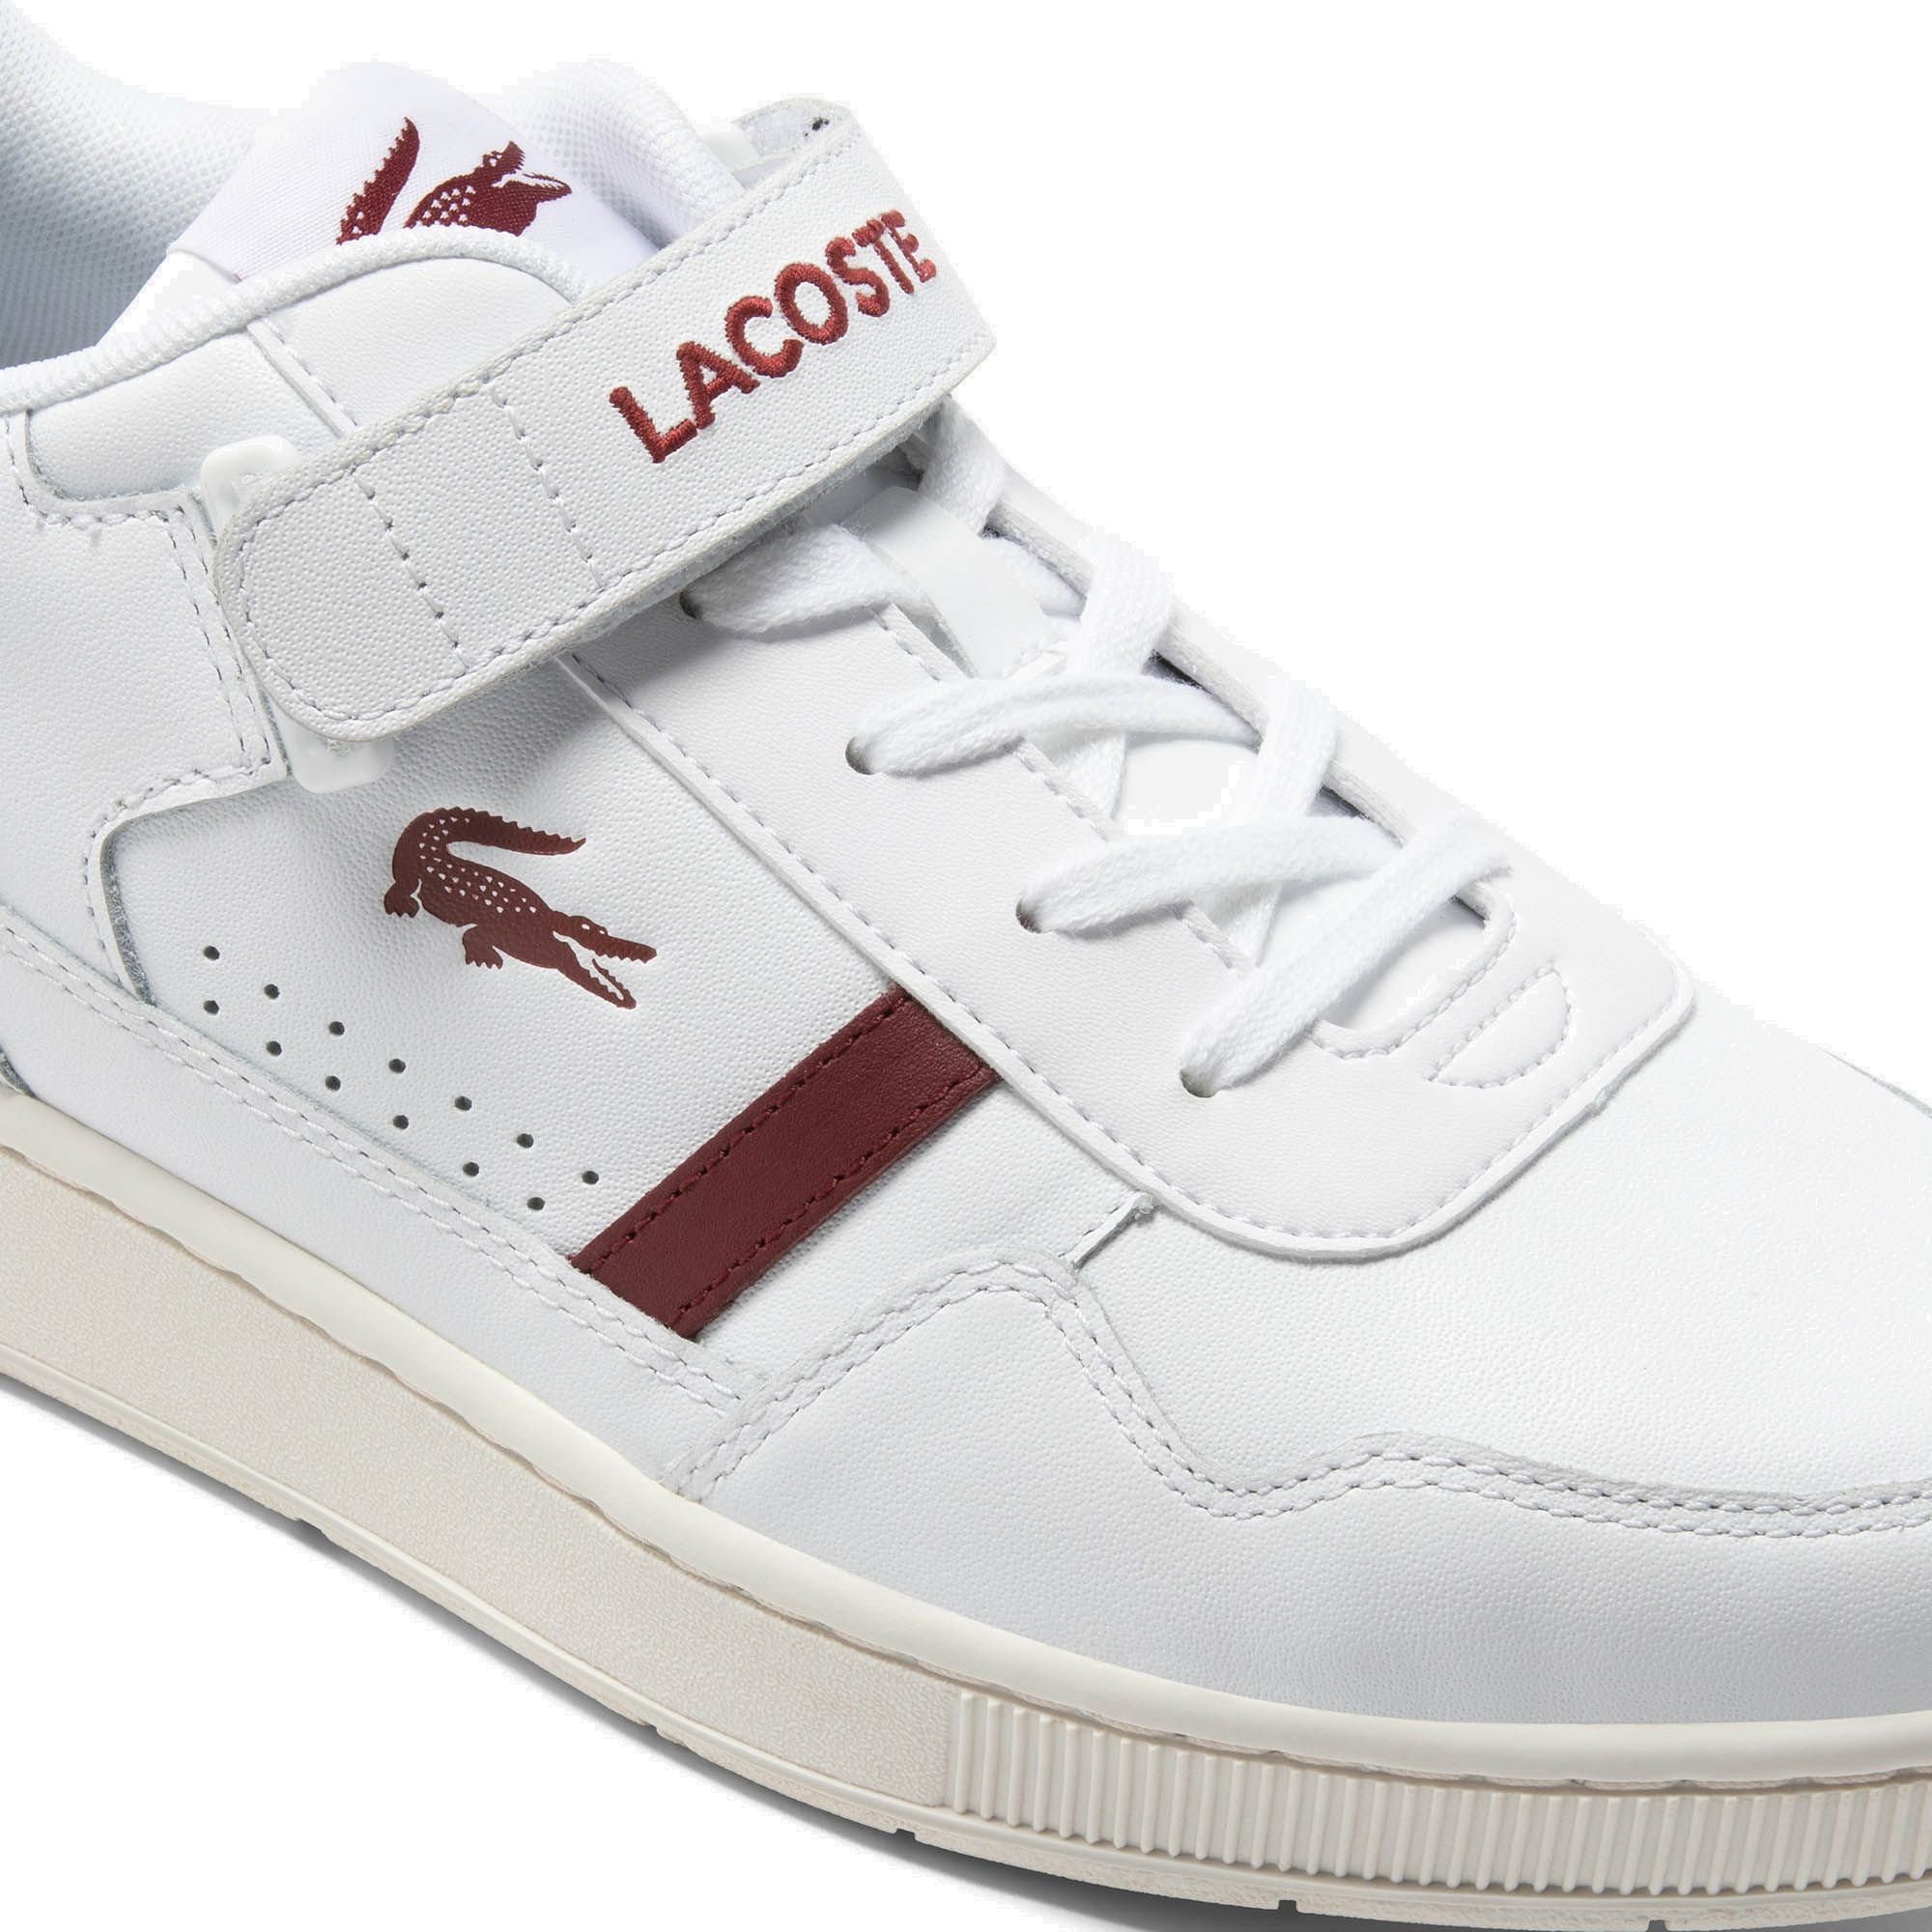 (2G1) WEISS/DUNKELROT Lacoste Sneaker